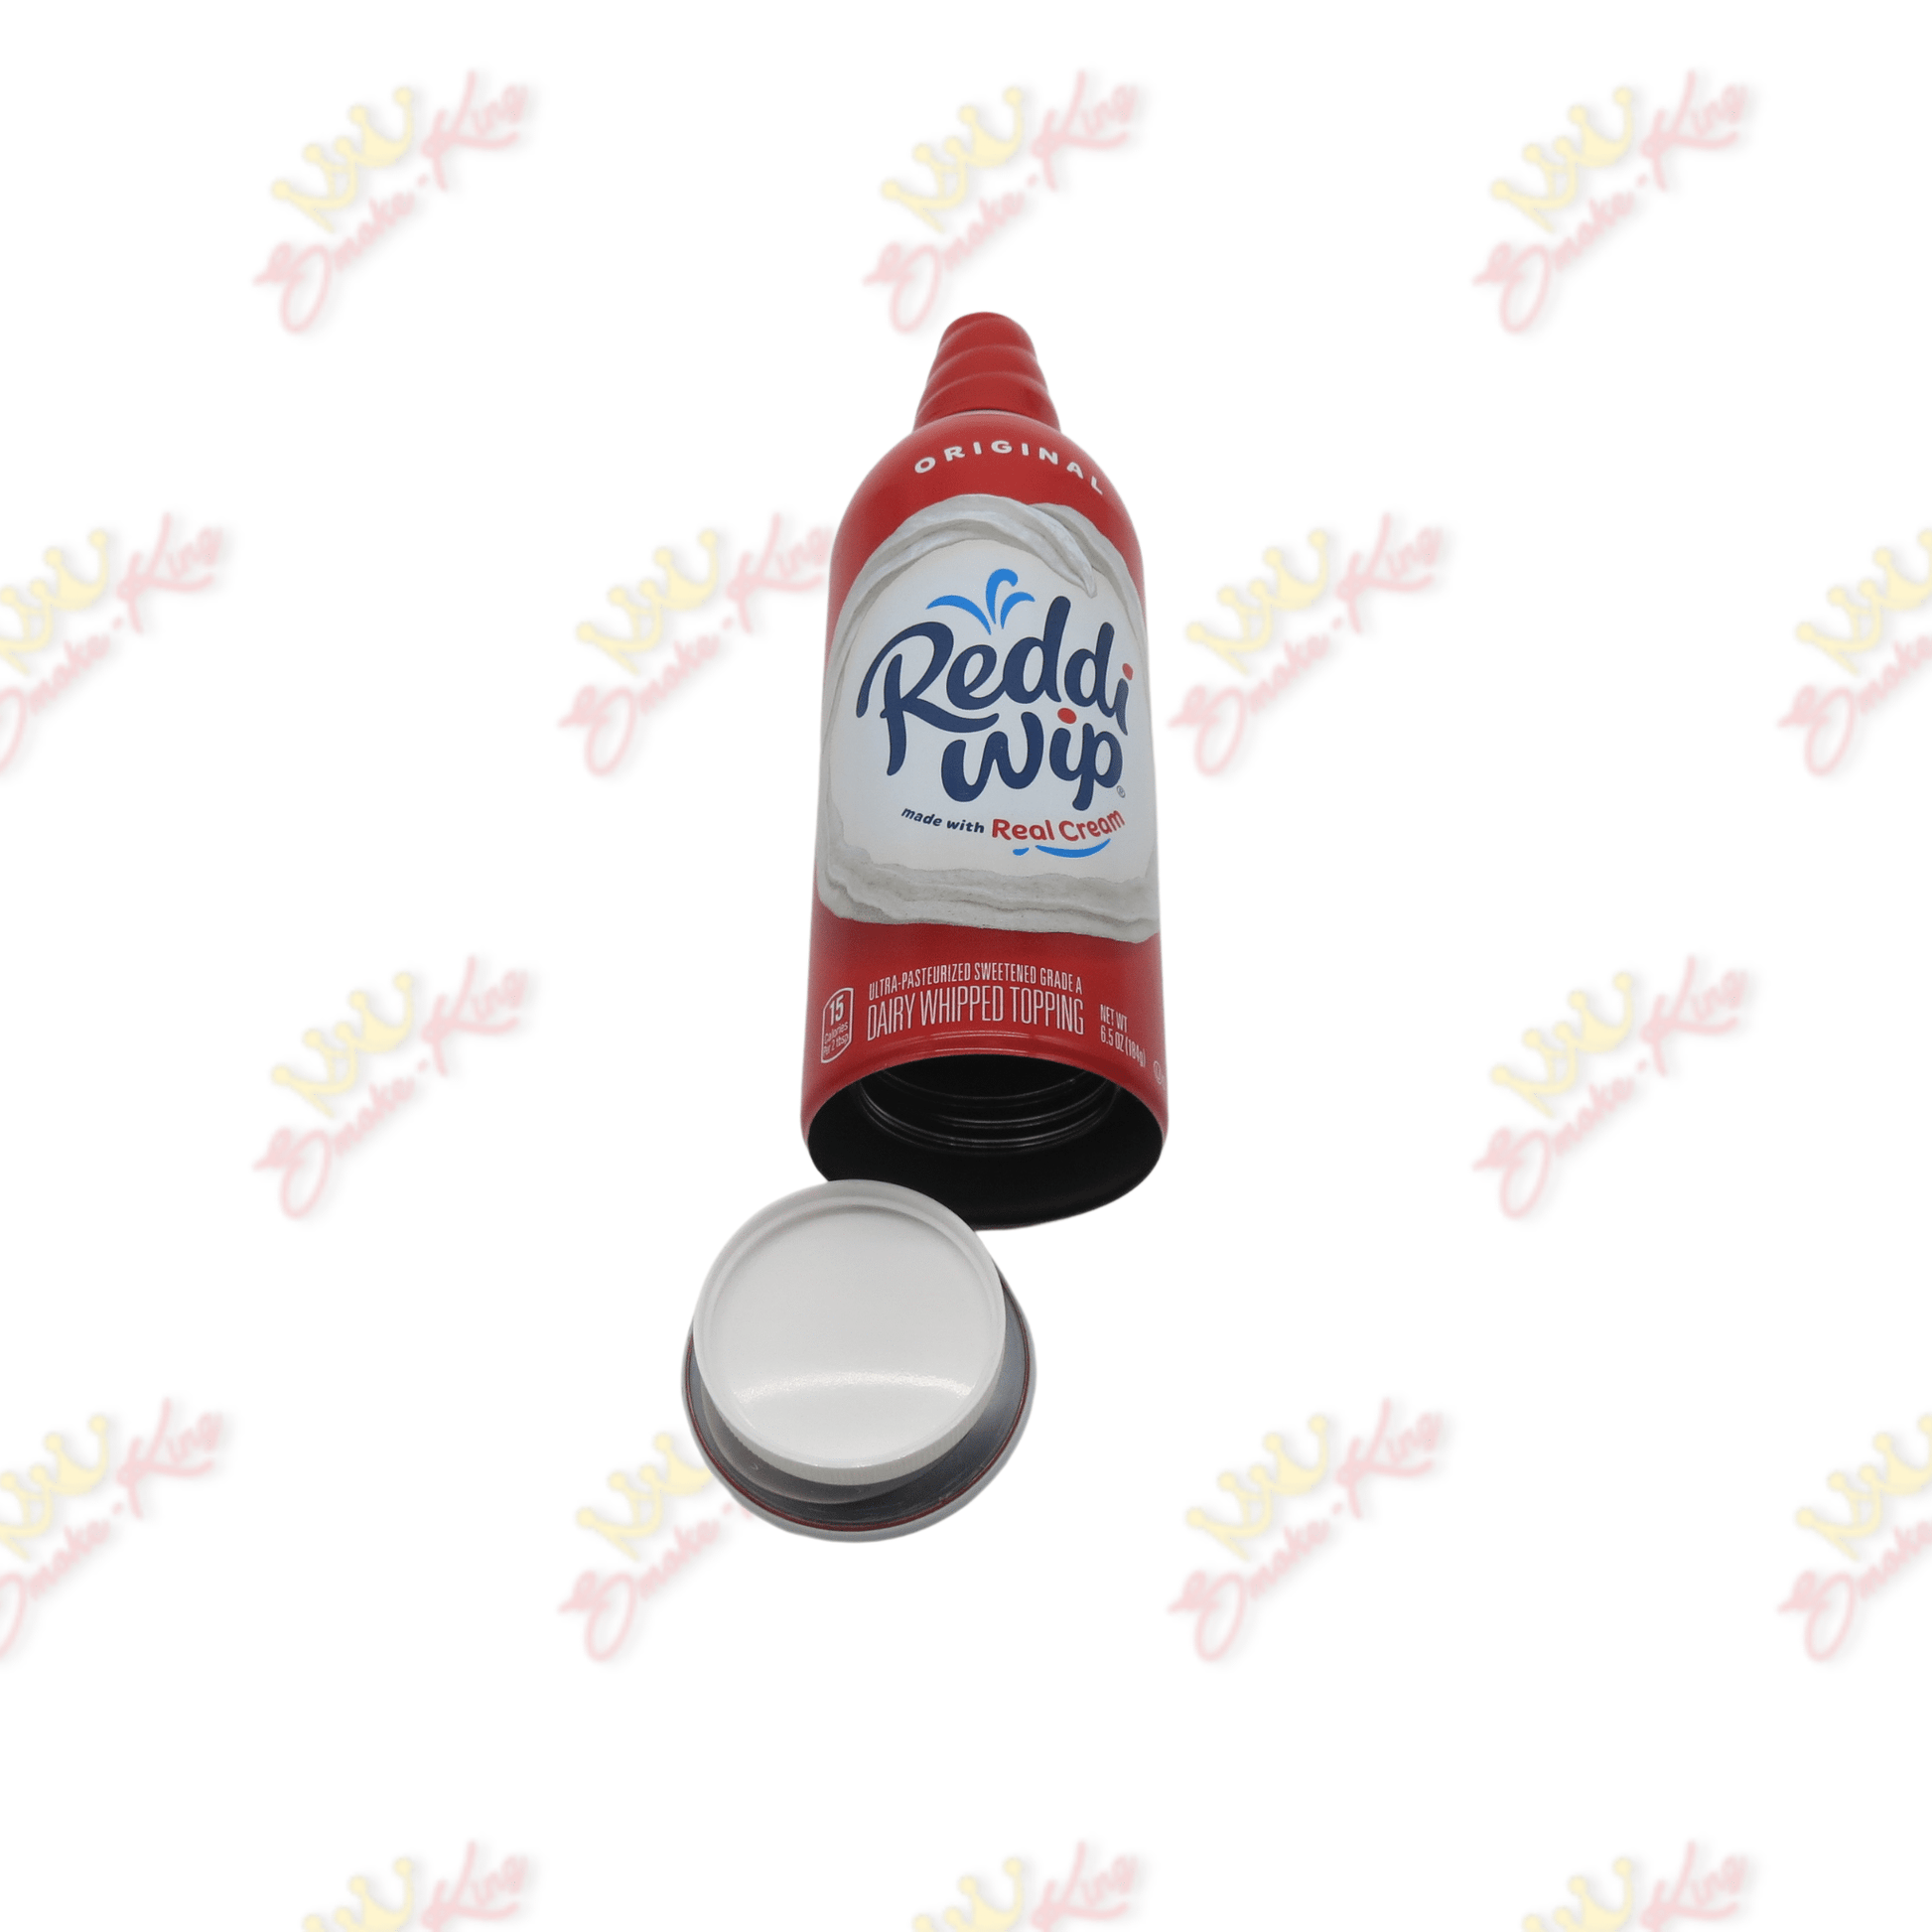 Smoke-king secret stash cans Reddi Whip secret stash can